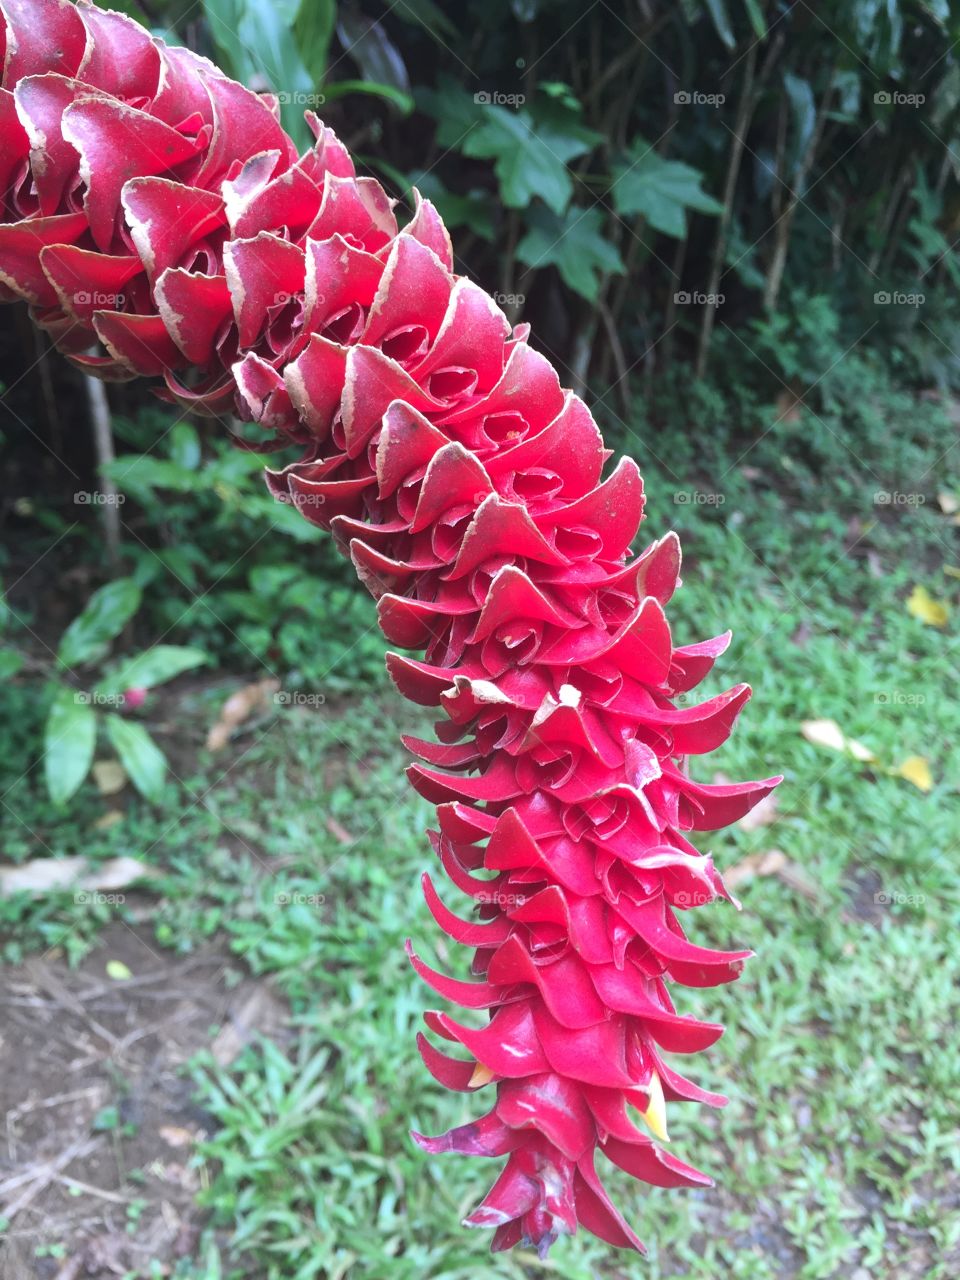 Maui plant life